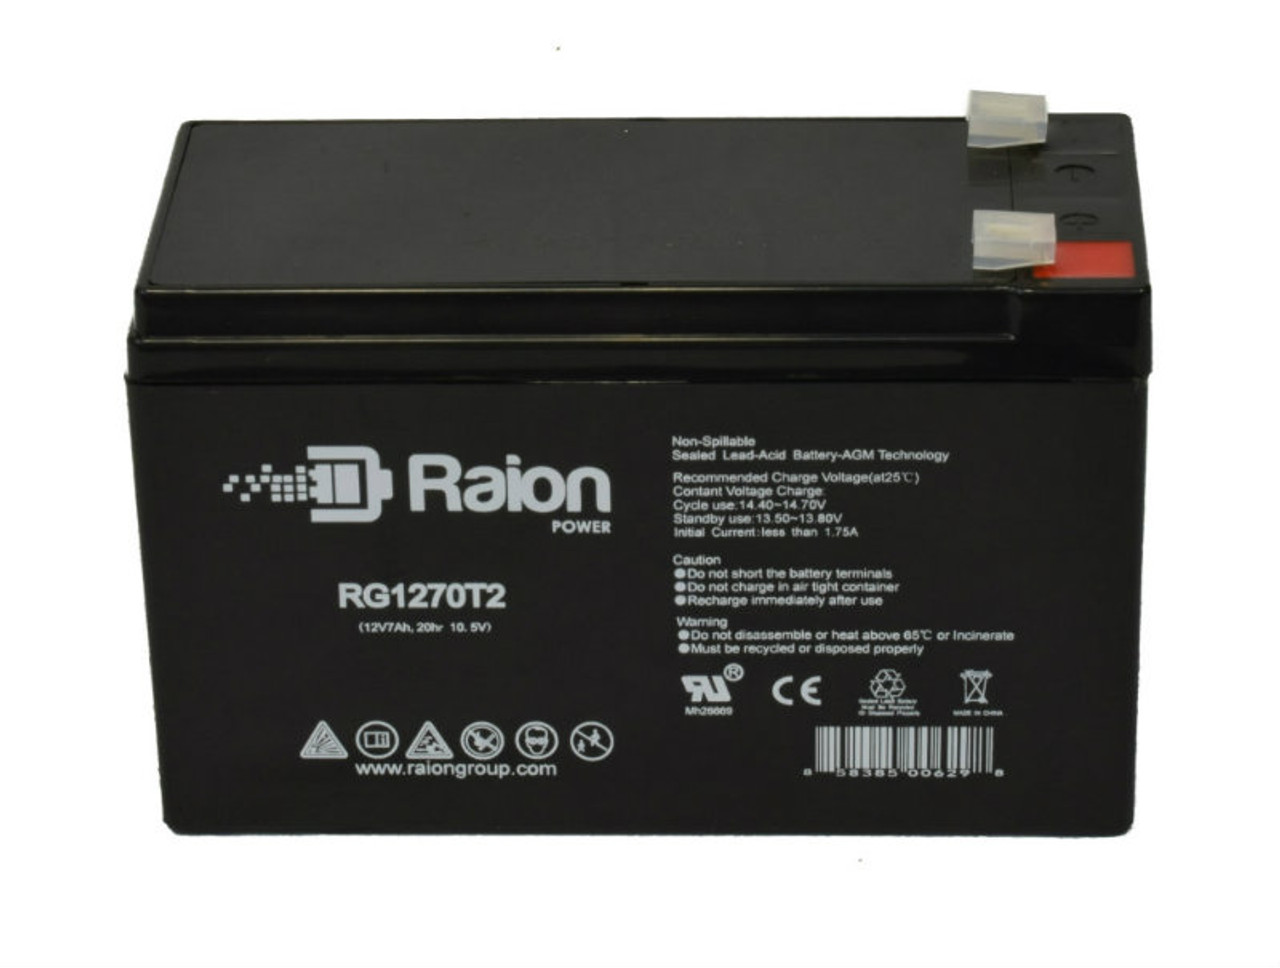 Raion Power RG1270T1 12V 7Ah Lead Acid Battery for Network Security Systems